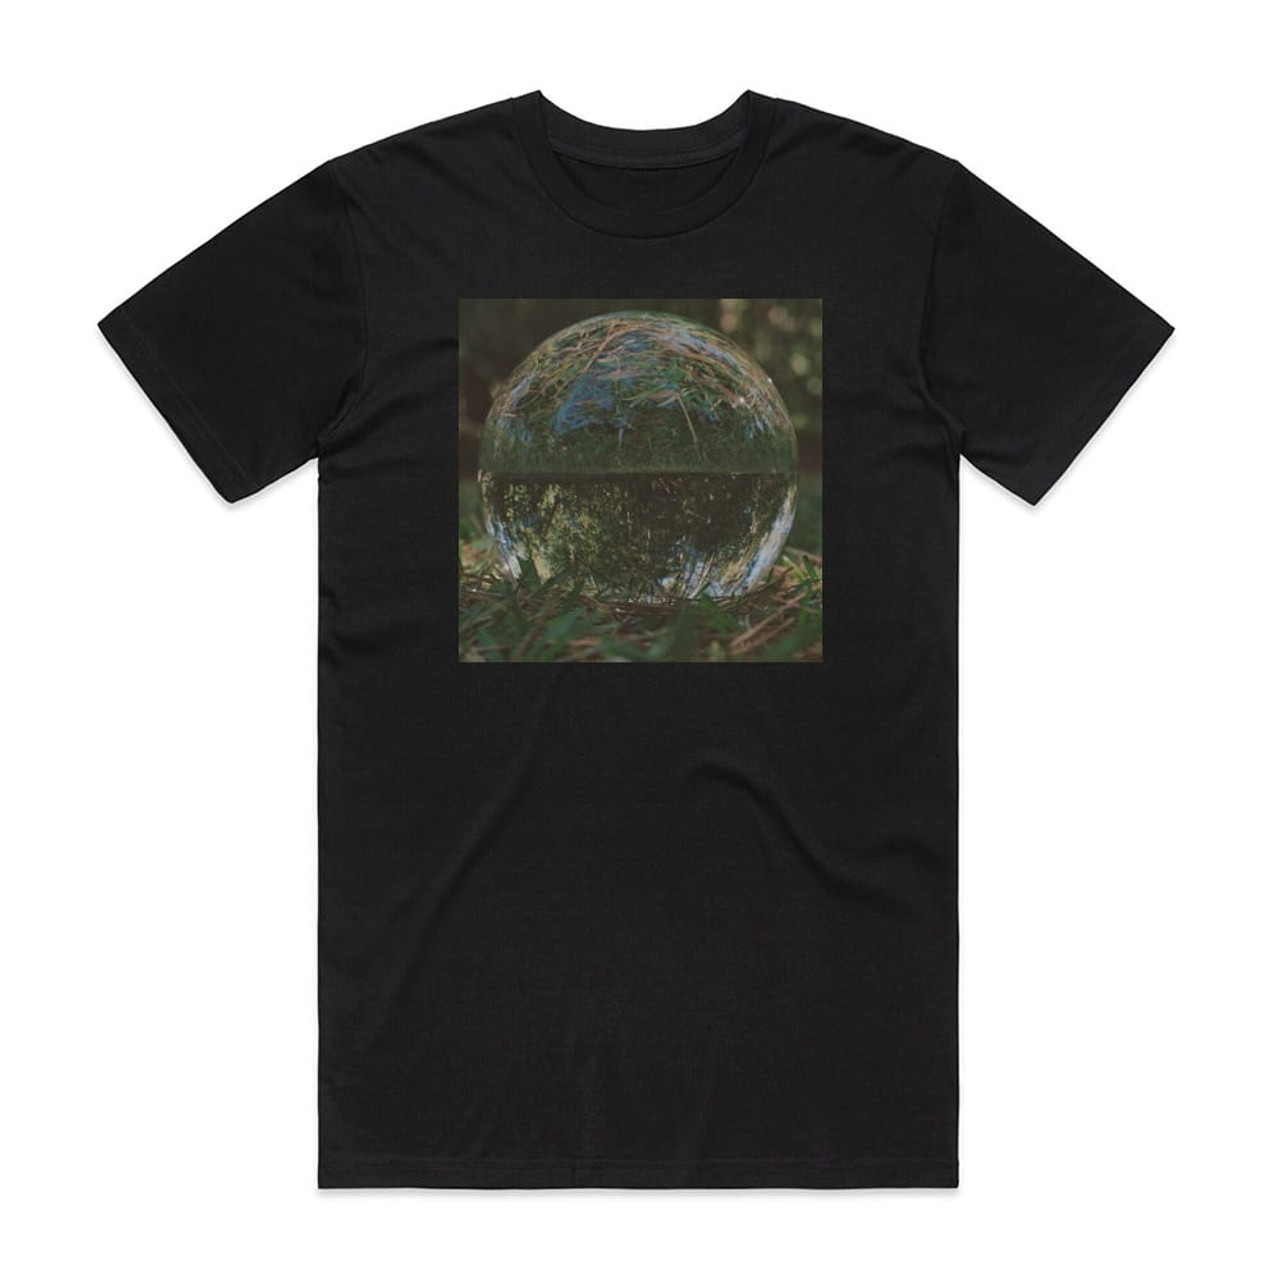 Darkside Spiral Album Cover T-Shirt Black